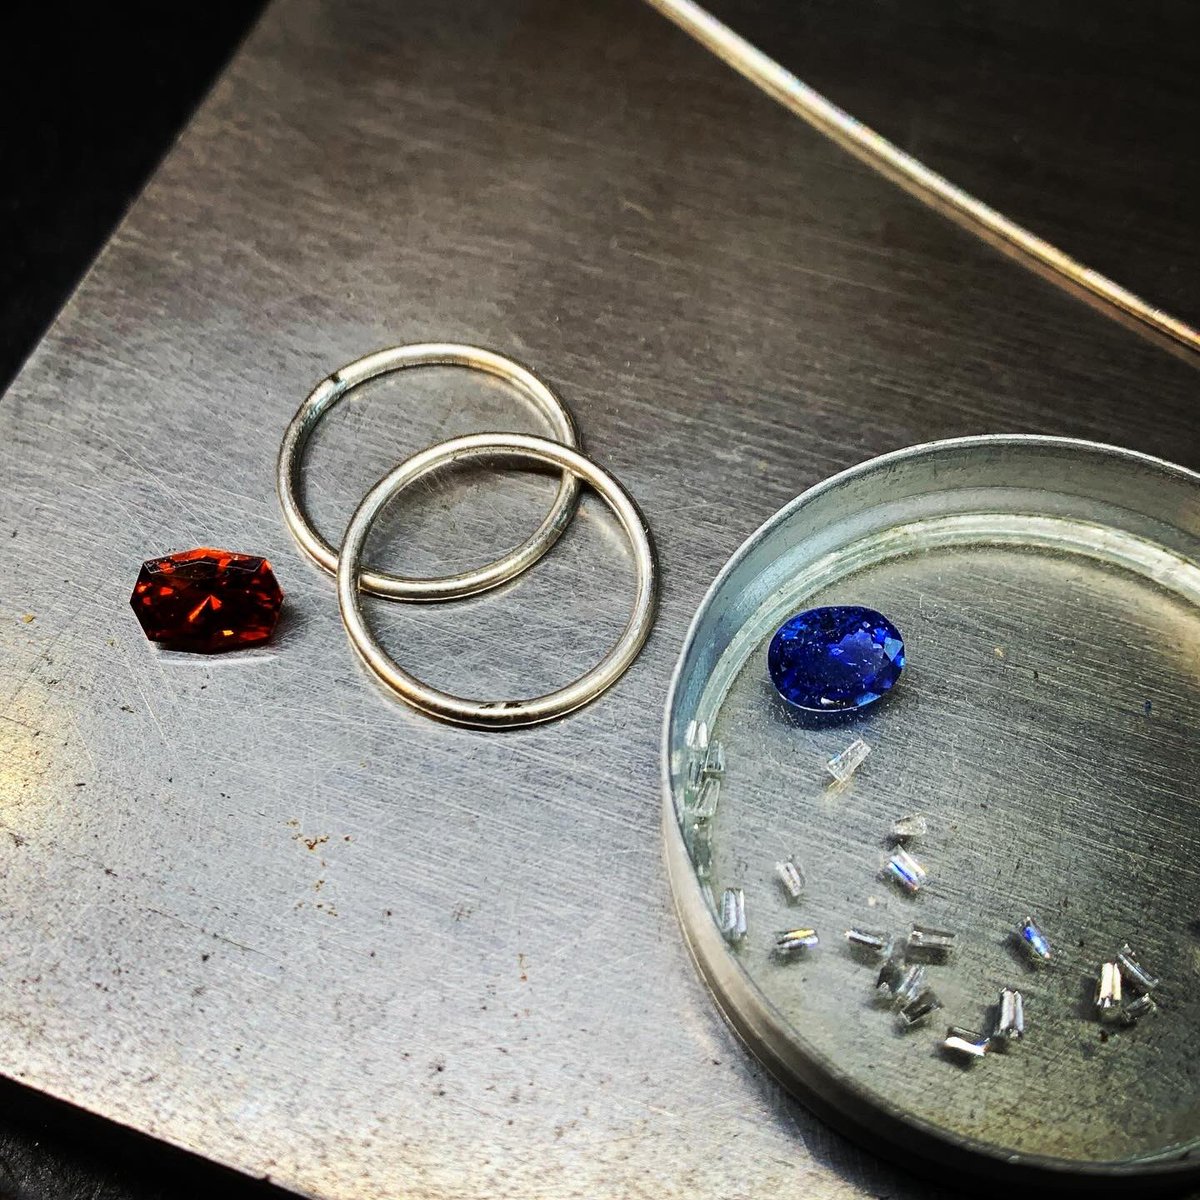 work in progress プラチナのリングを溶解し鍛造して線引き加工後、リングに成形します。この後、さらに丸線材を細く加工して石座を作ります。 #jewelry #handmadejewelry #jewelrymaking #bespokejewelry #hessonitegarnet #yujiishii